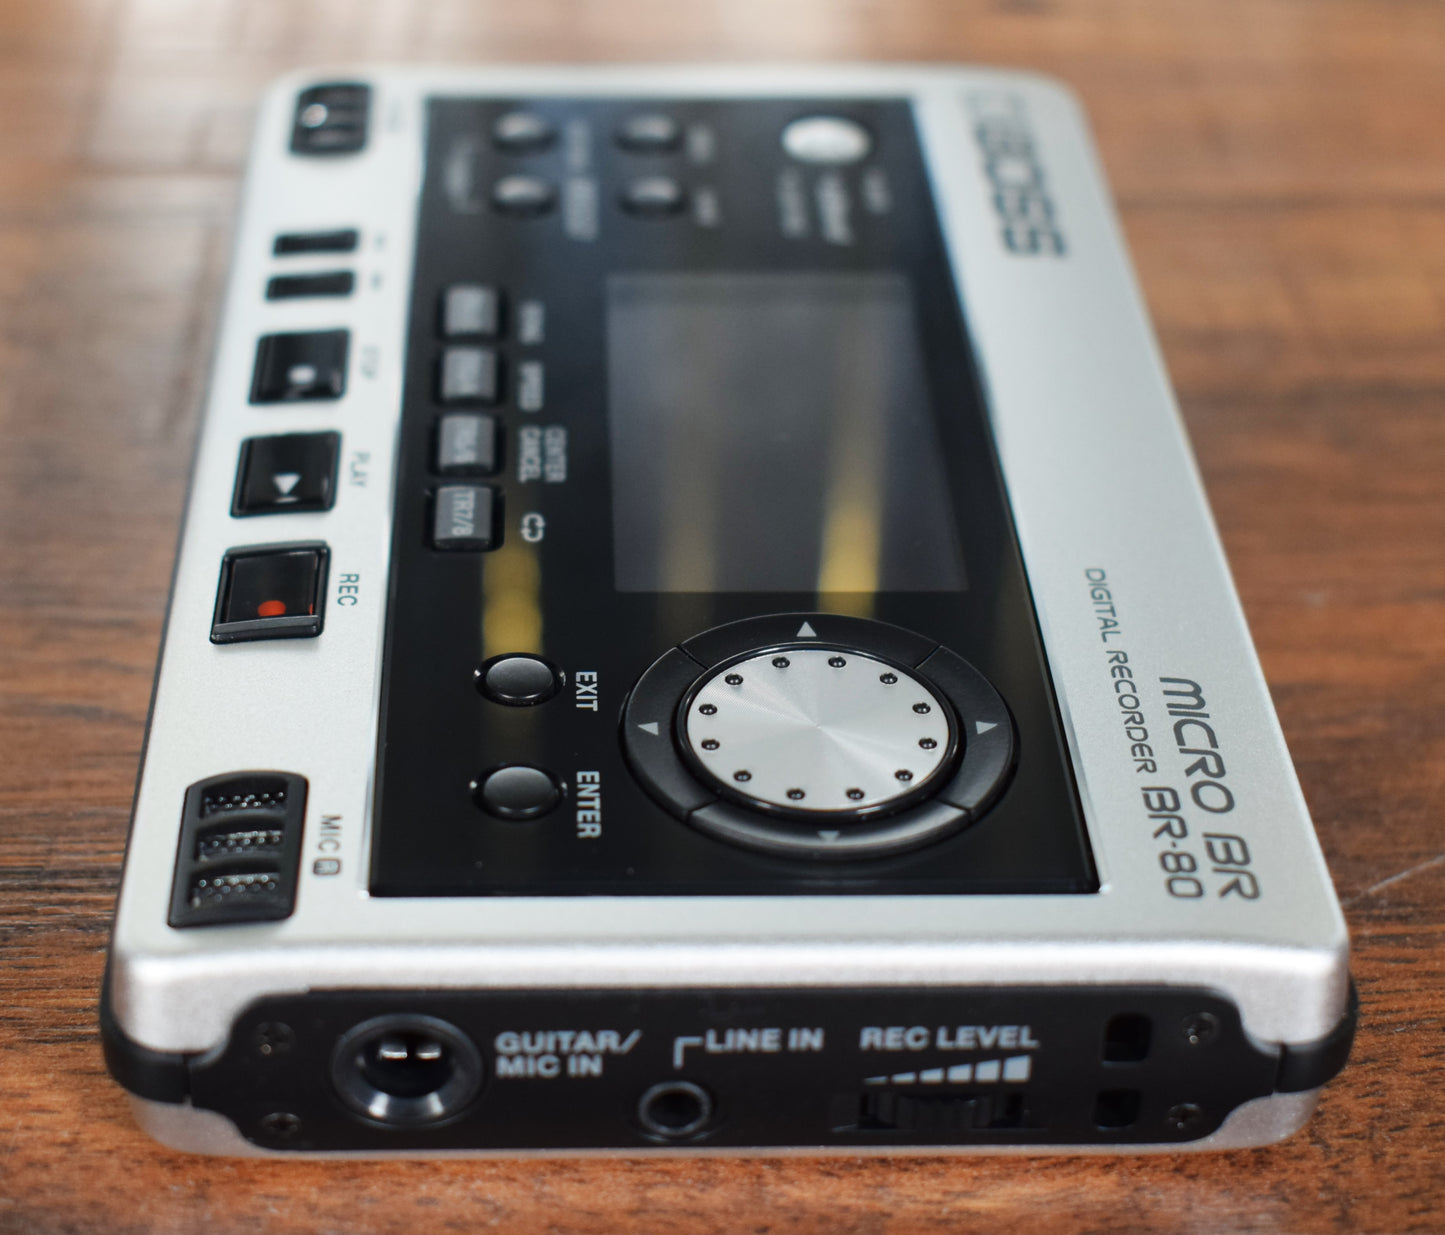 Boss Micro BR BR-80 8 Track Digital Recorder